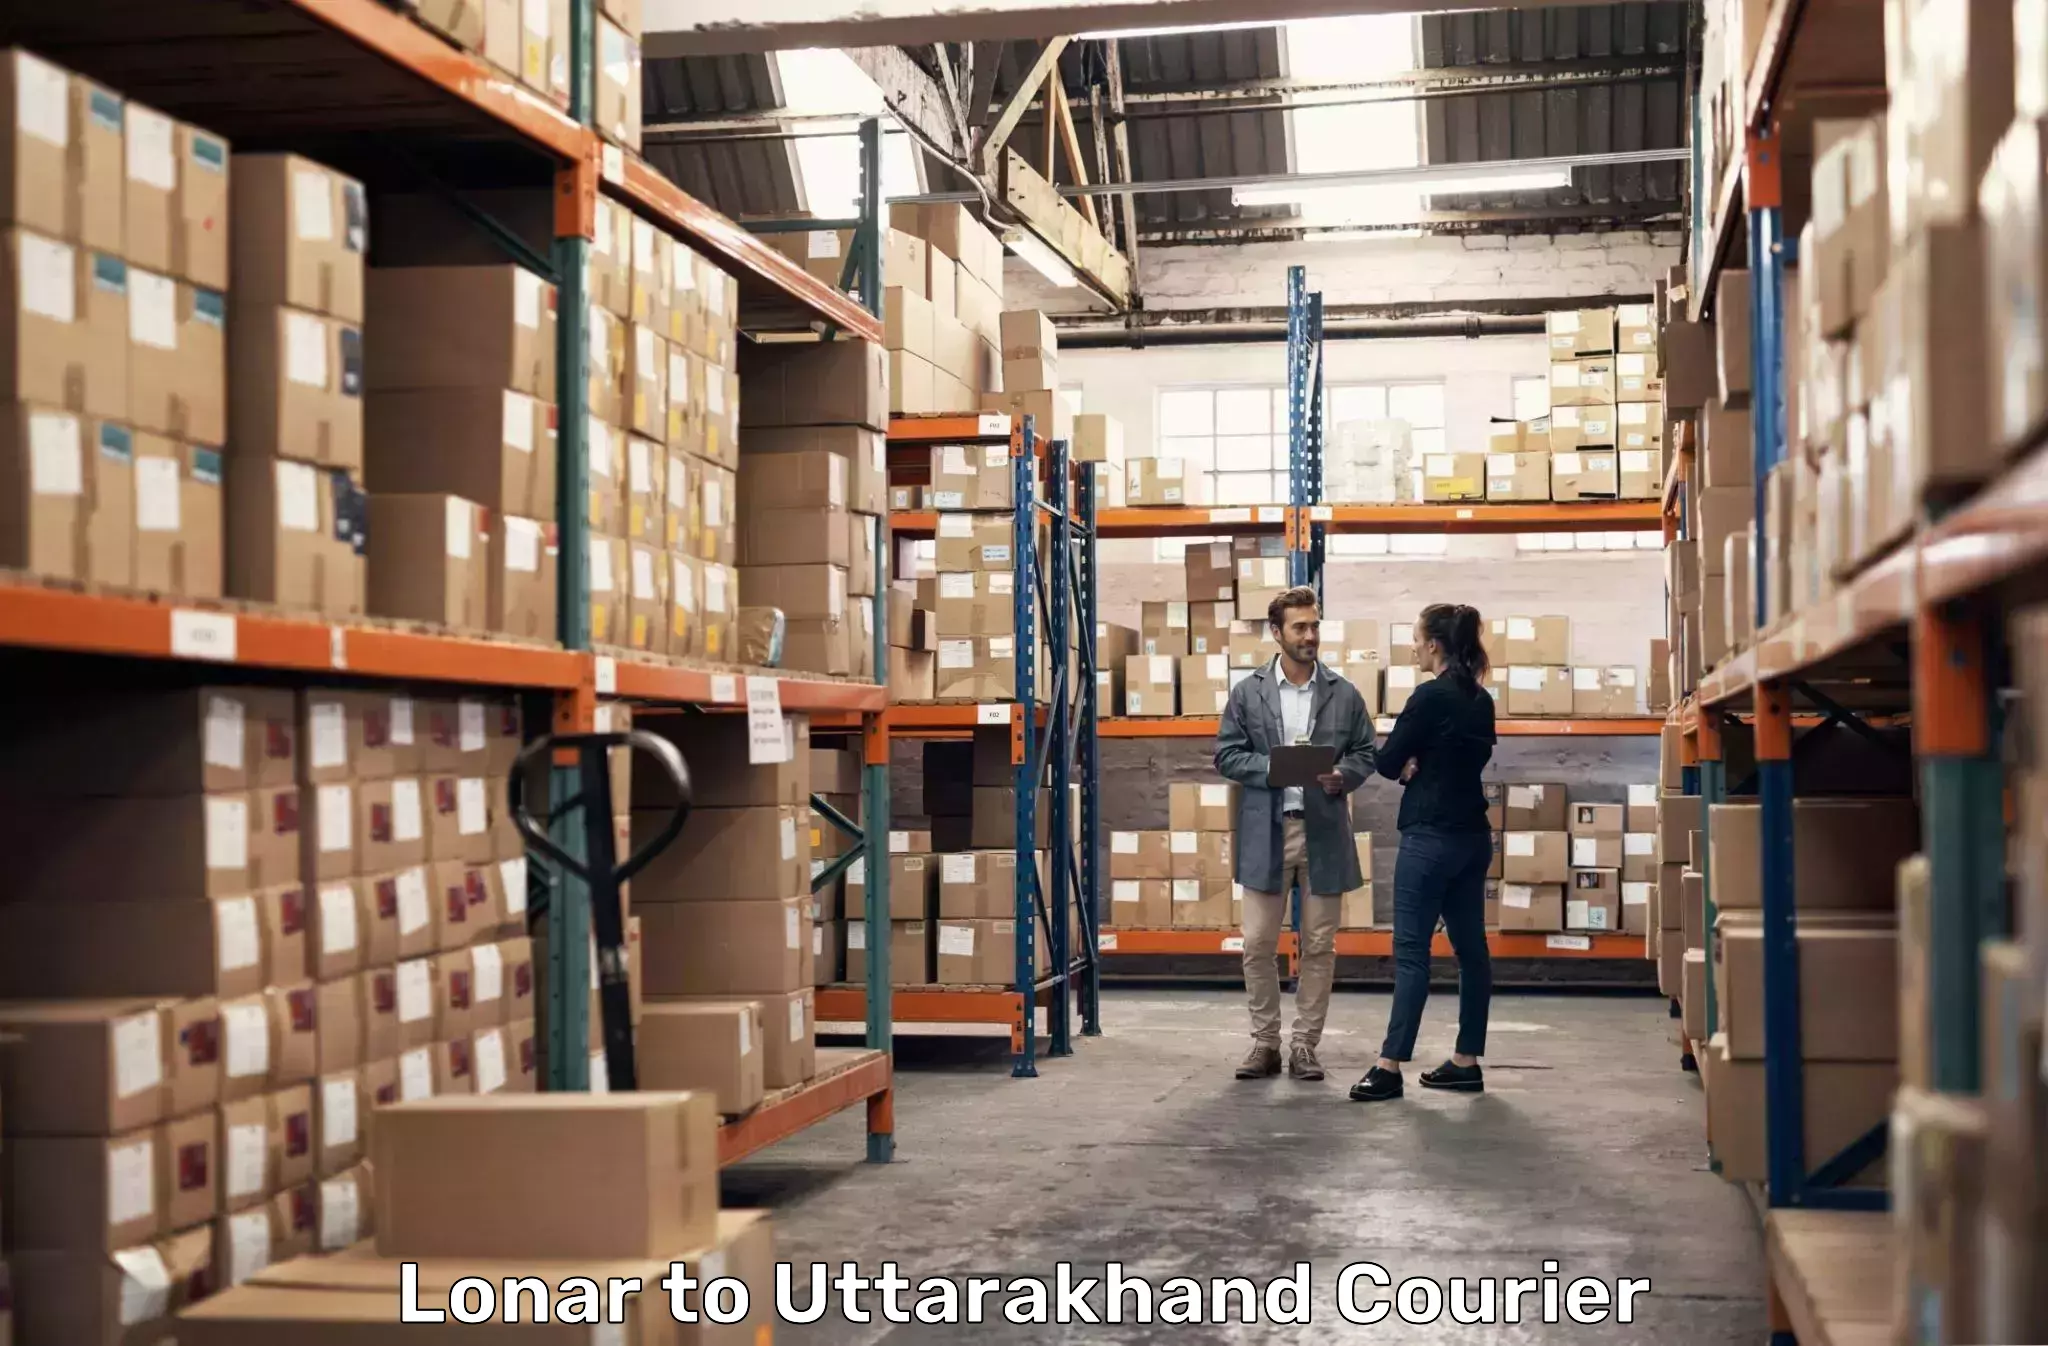 Nationwide shipping capabilities in Lonar to Uttarakhand